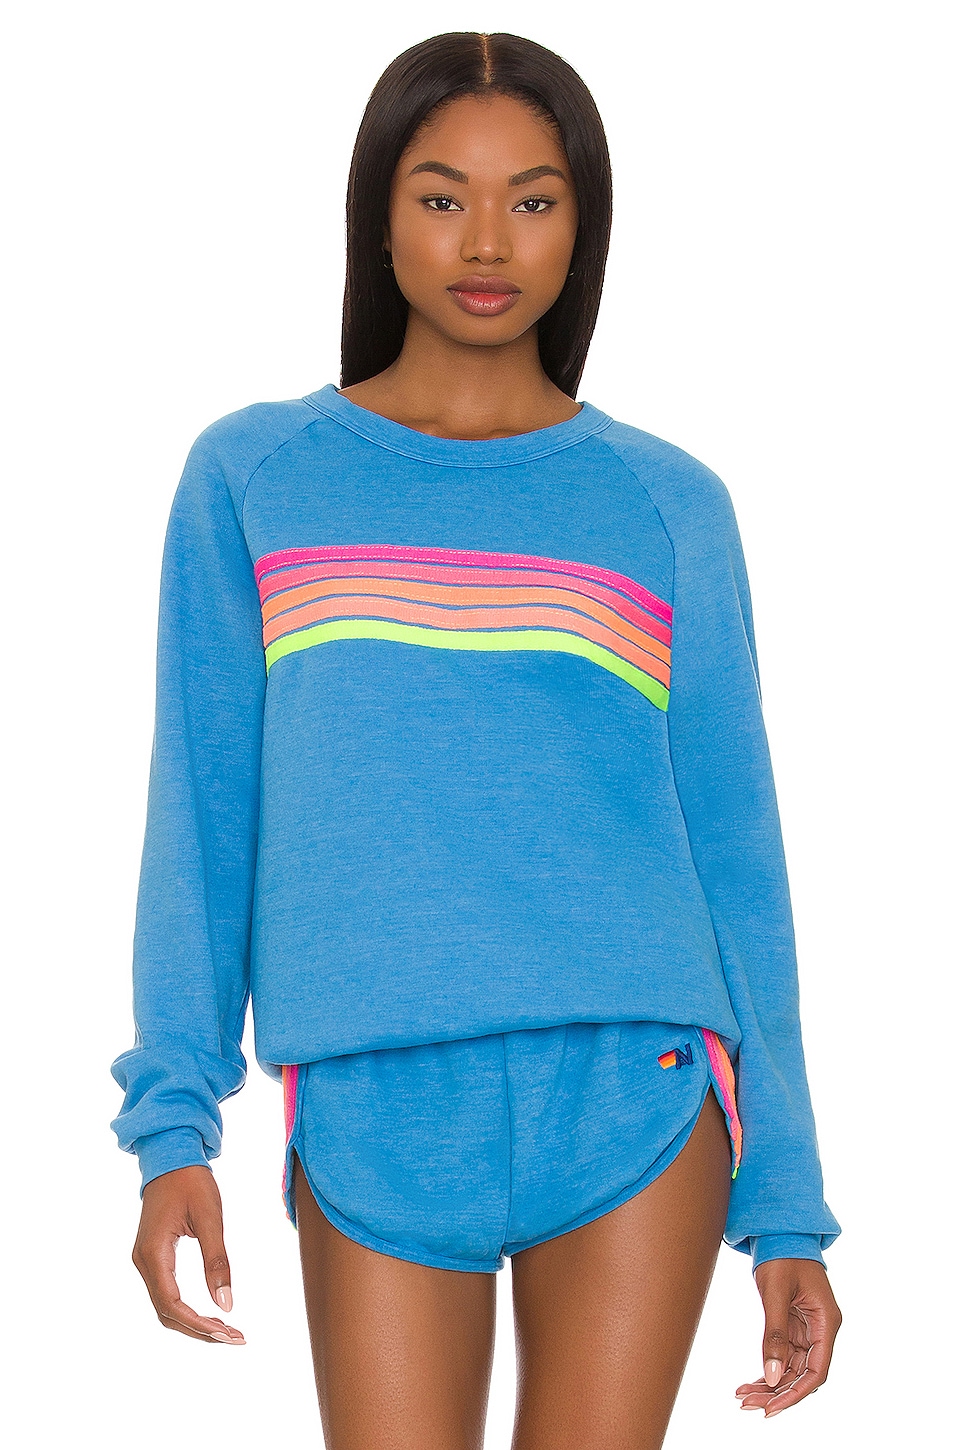 Aviator Nation 5 Stripe Crewneck Sweatshirt in Ocean & Neon Rainbow